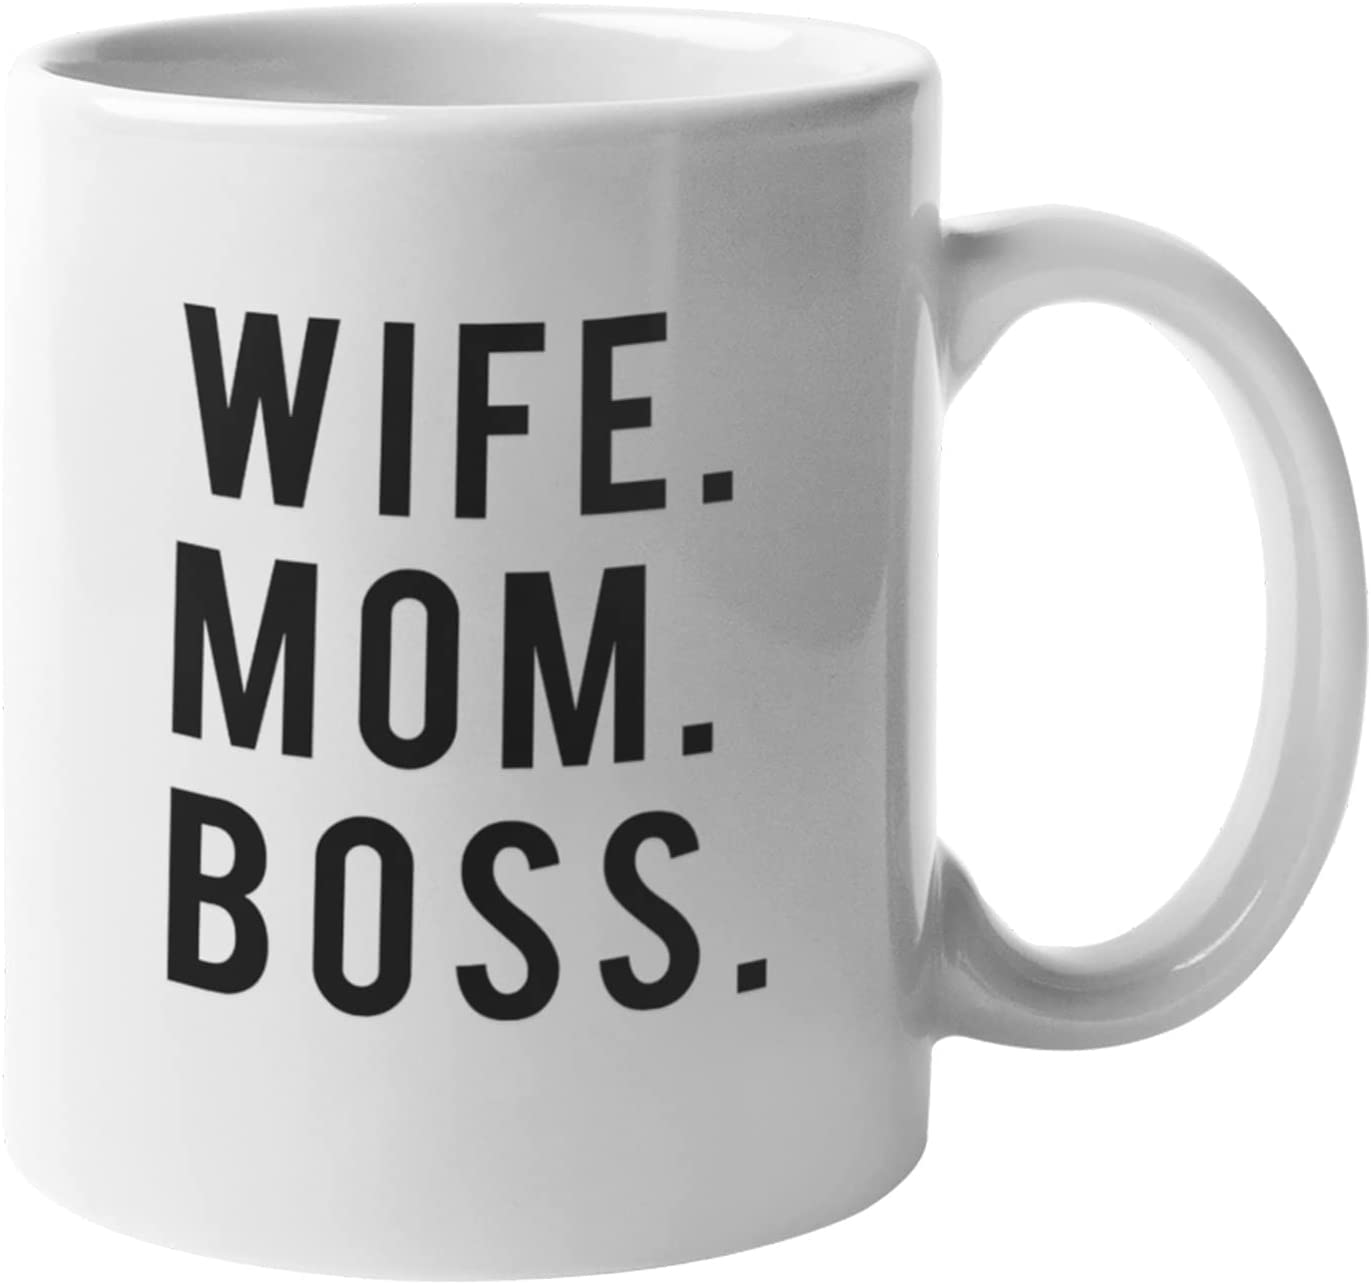 Wife Mom Boss Coffee Mug - Funny and Giftable 11oz Ceramic Coffee Cup